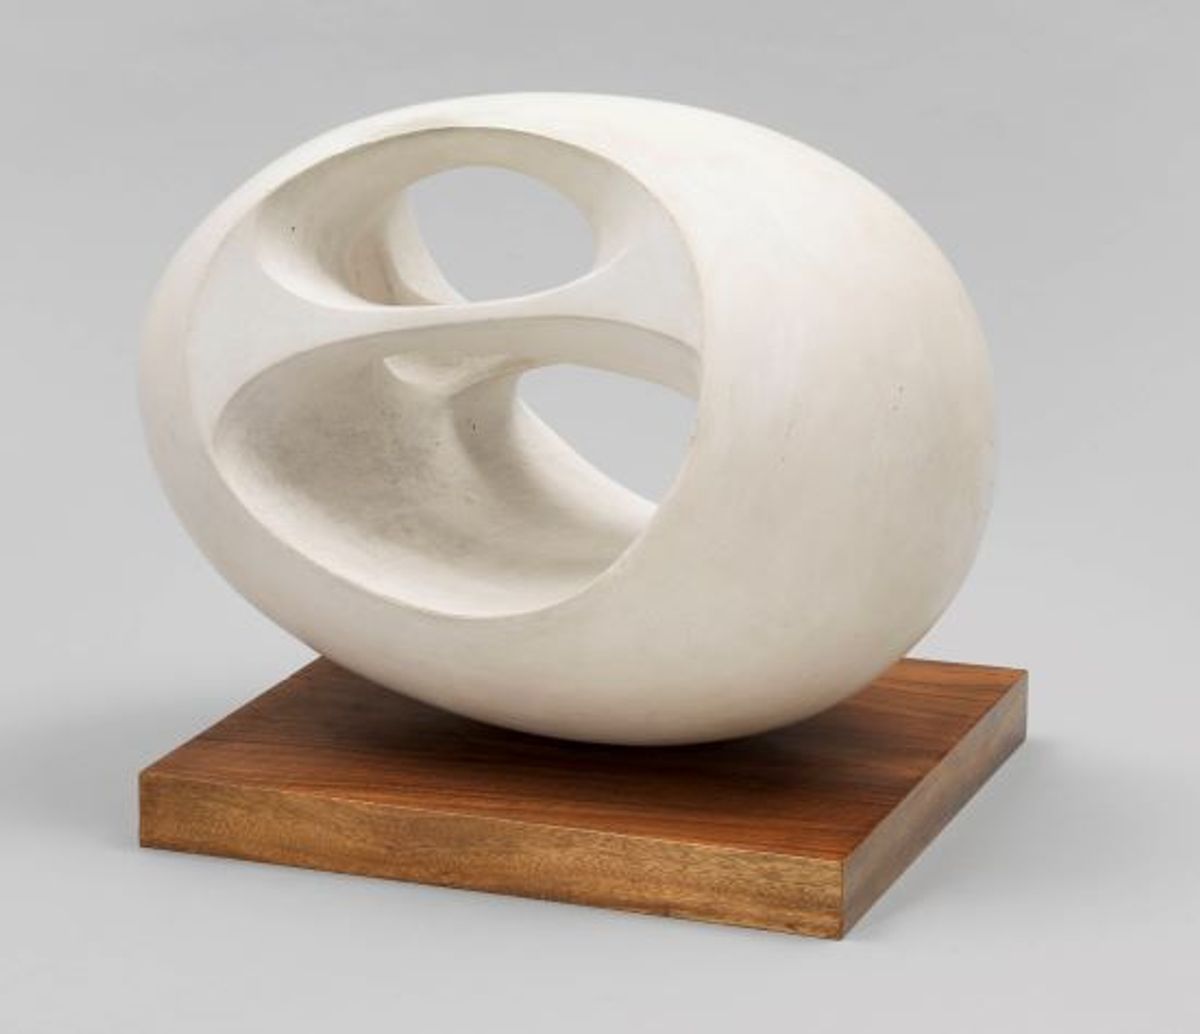 Barbara Hepworth, Oval Sculpture (No.2), 1943, plâtre sur base de bois. © Tate